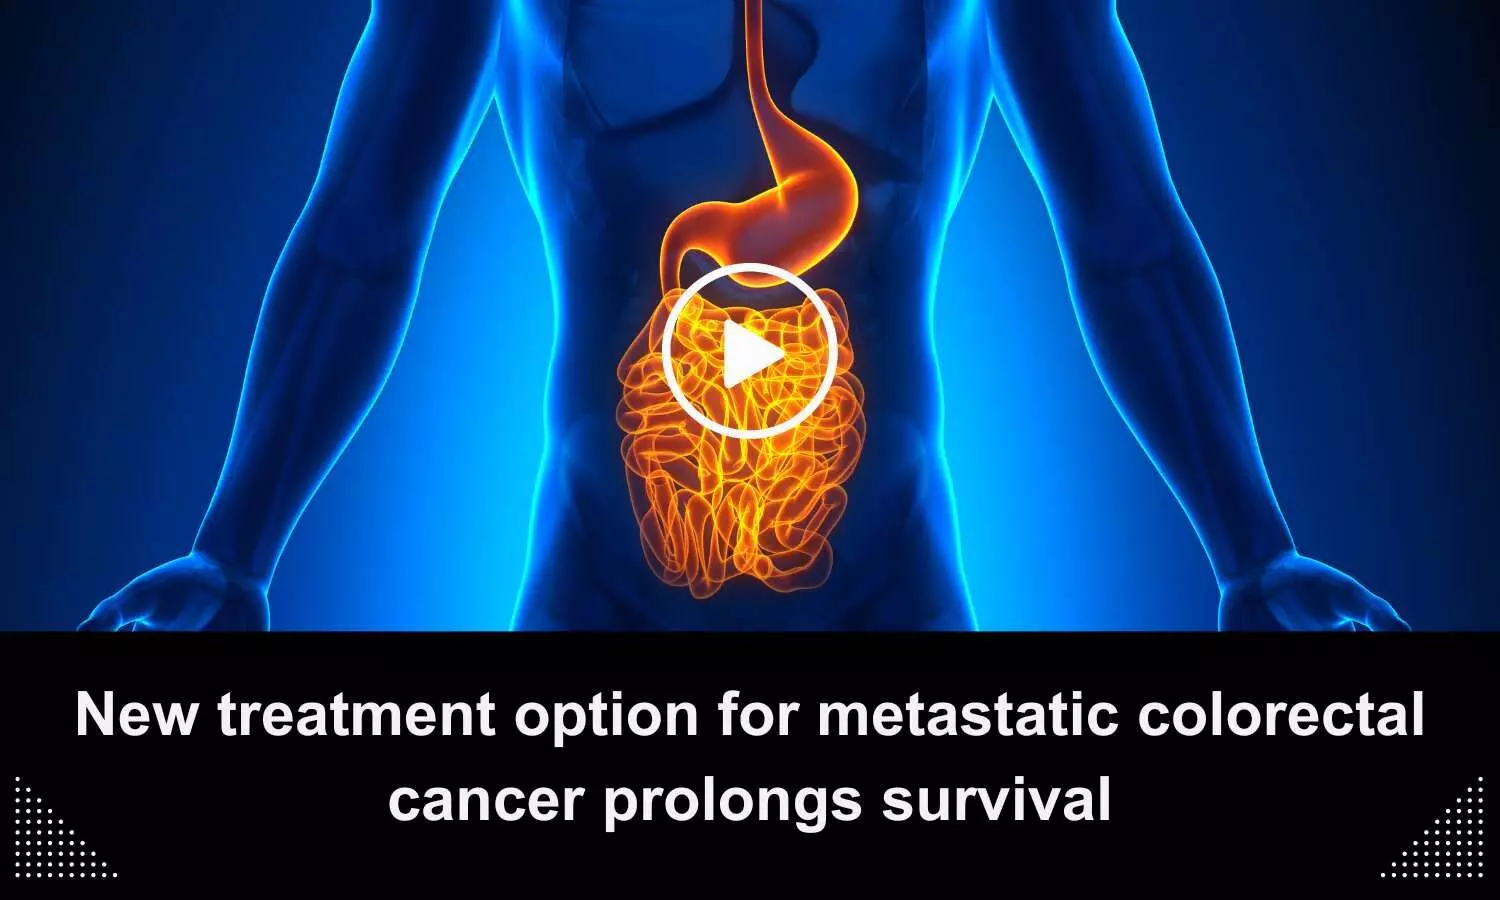 New treatment option for metastatic colorectal cancer prolongs survival